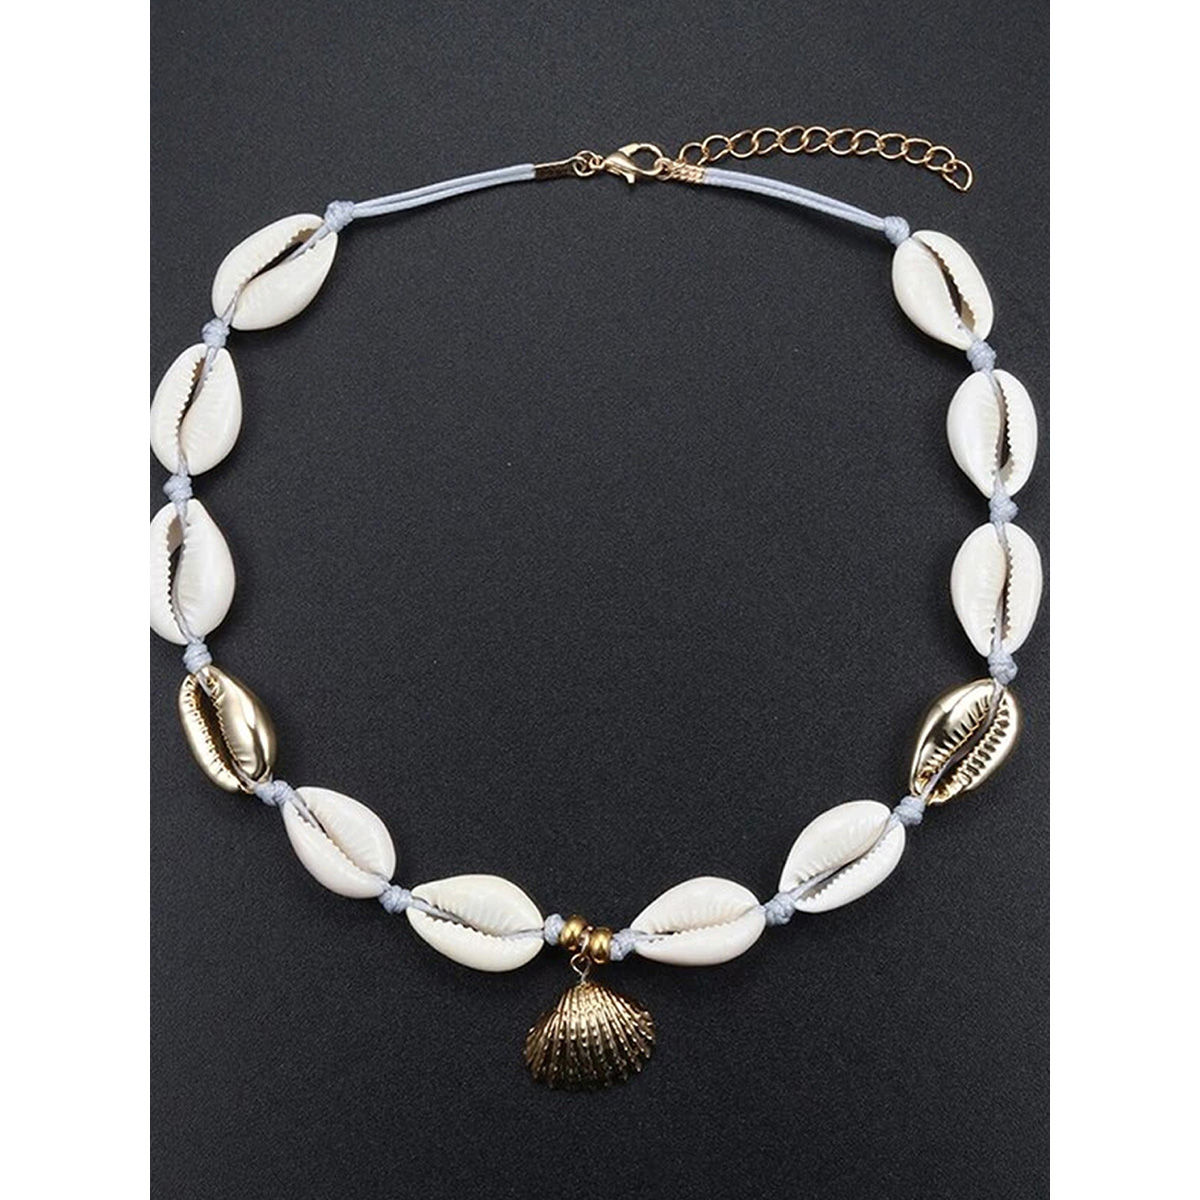 Starain White Shell Necklace Bracelet for Women Adjustable Puka Beach Seashell  Choker Set - Walmart.com